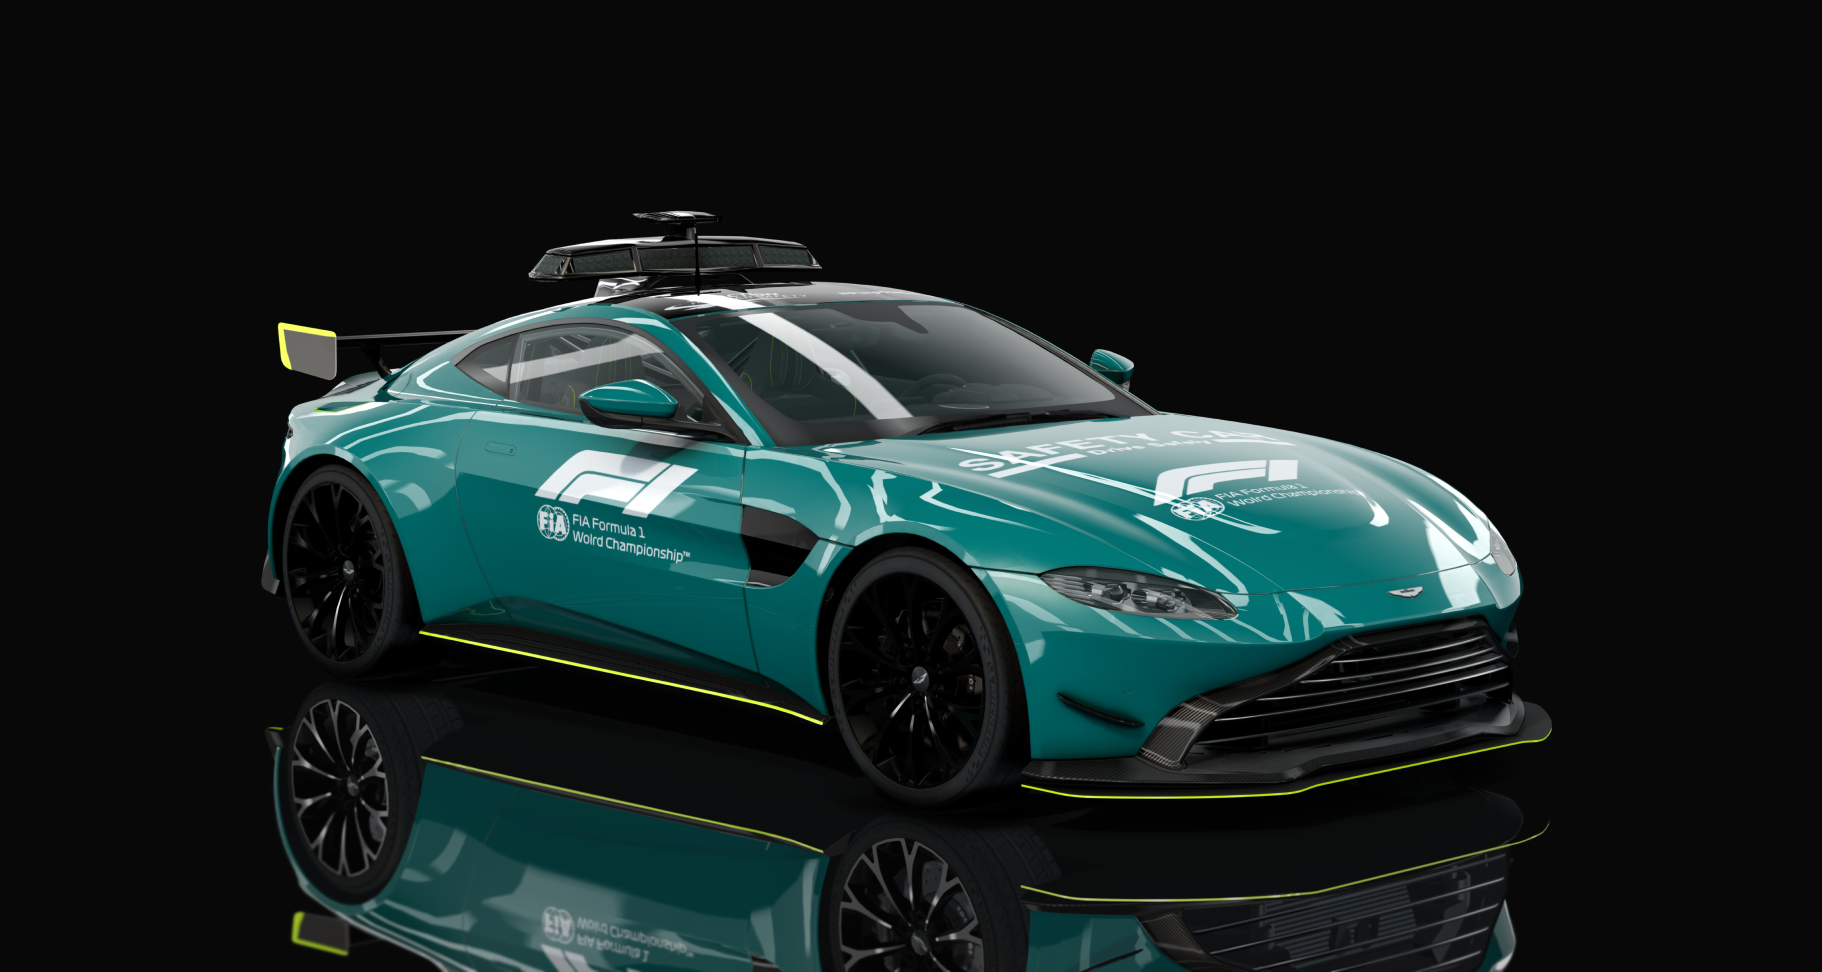 Aston Martin Vantage safety car 2021, skin F1